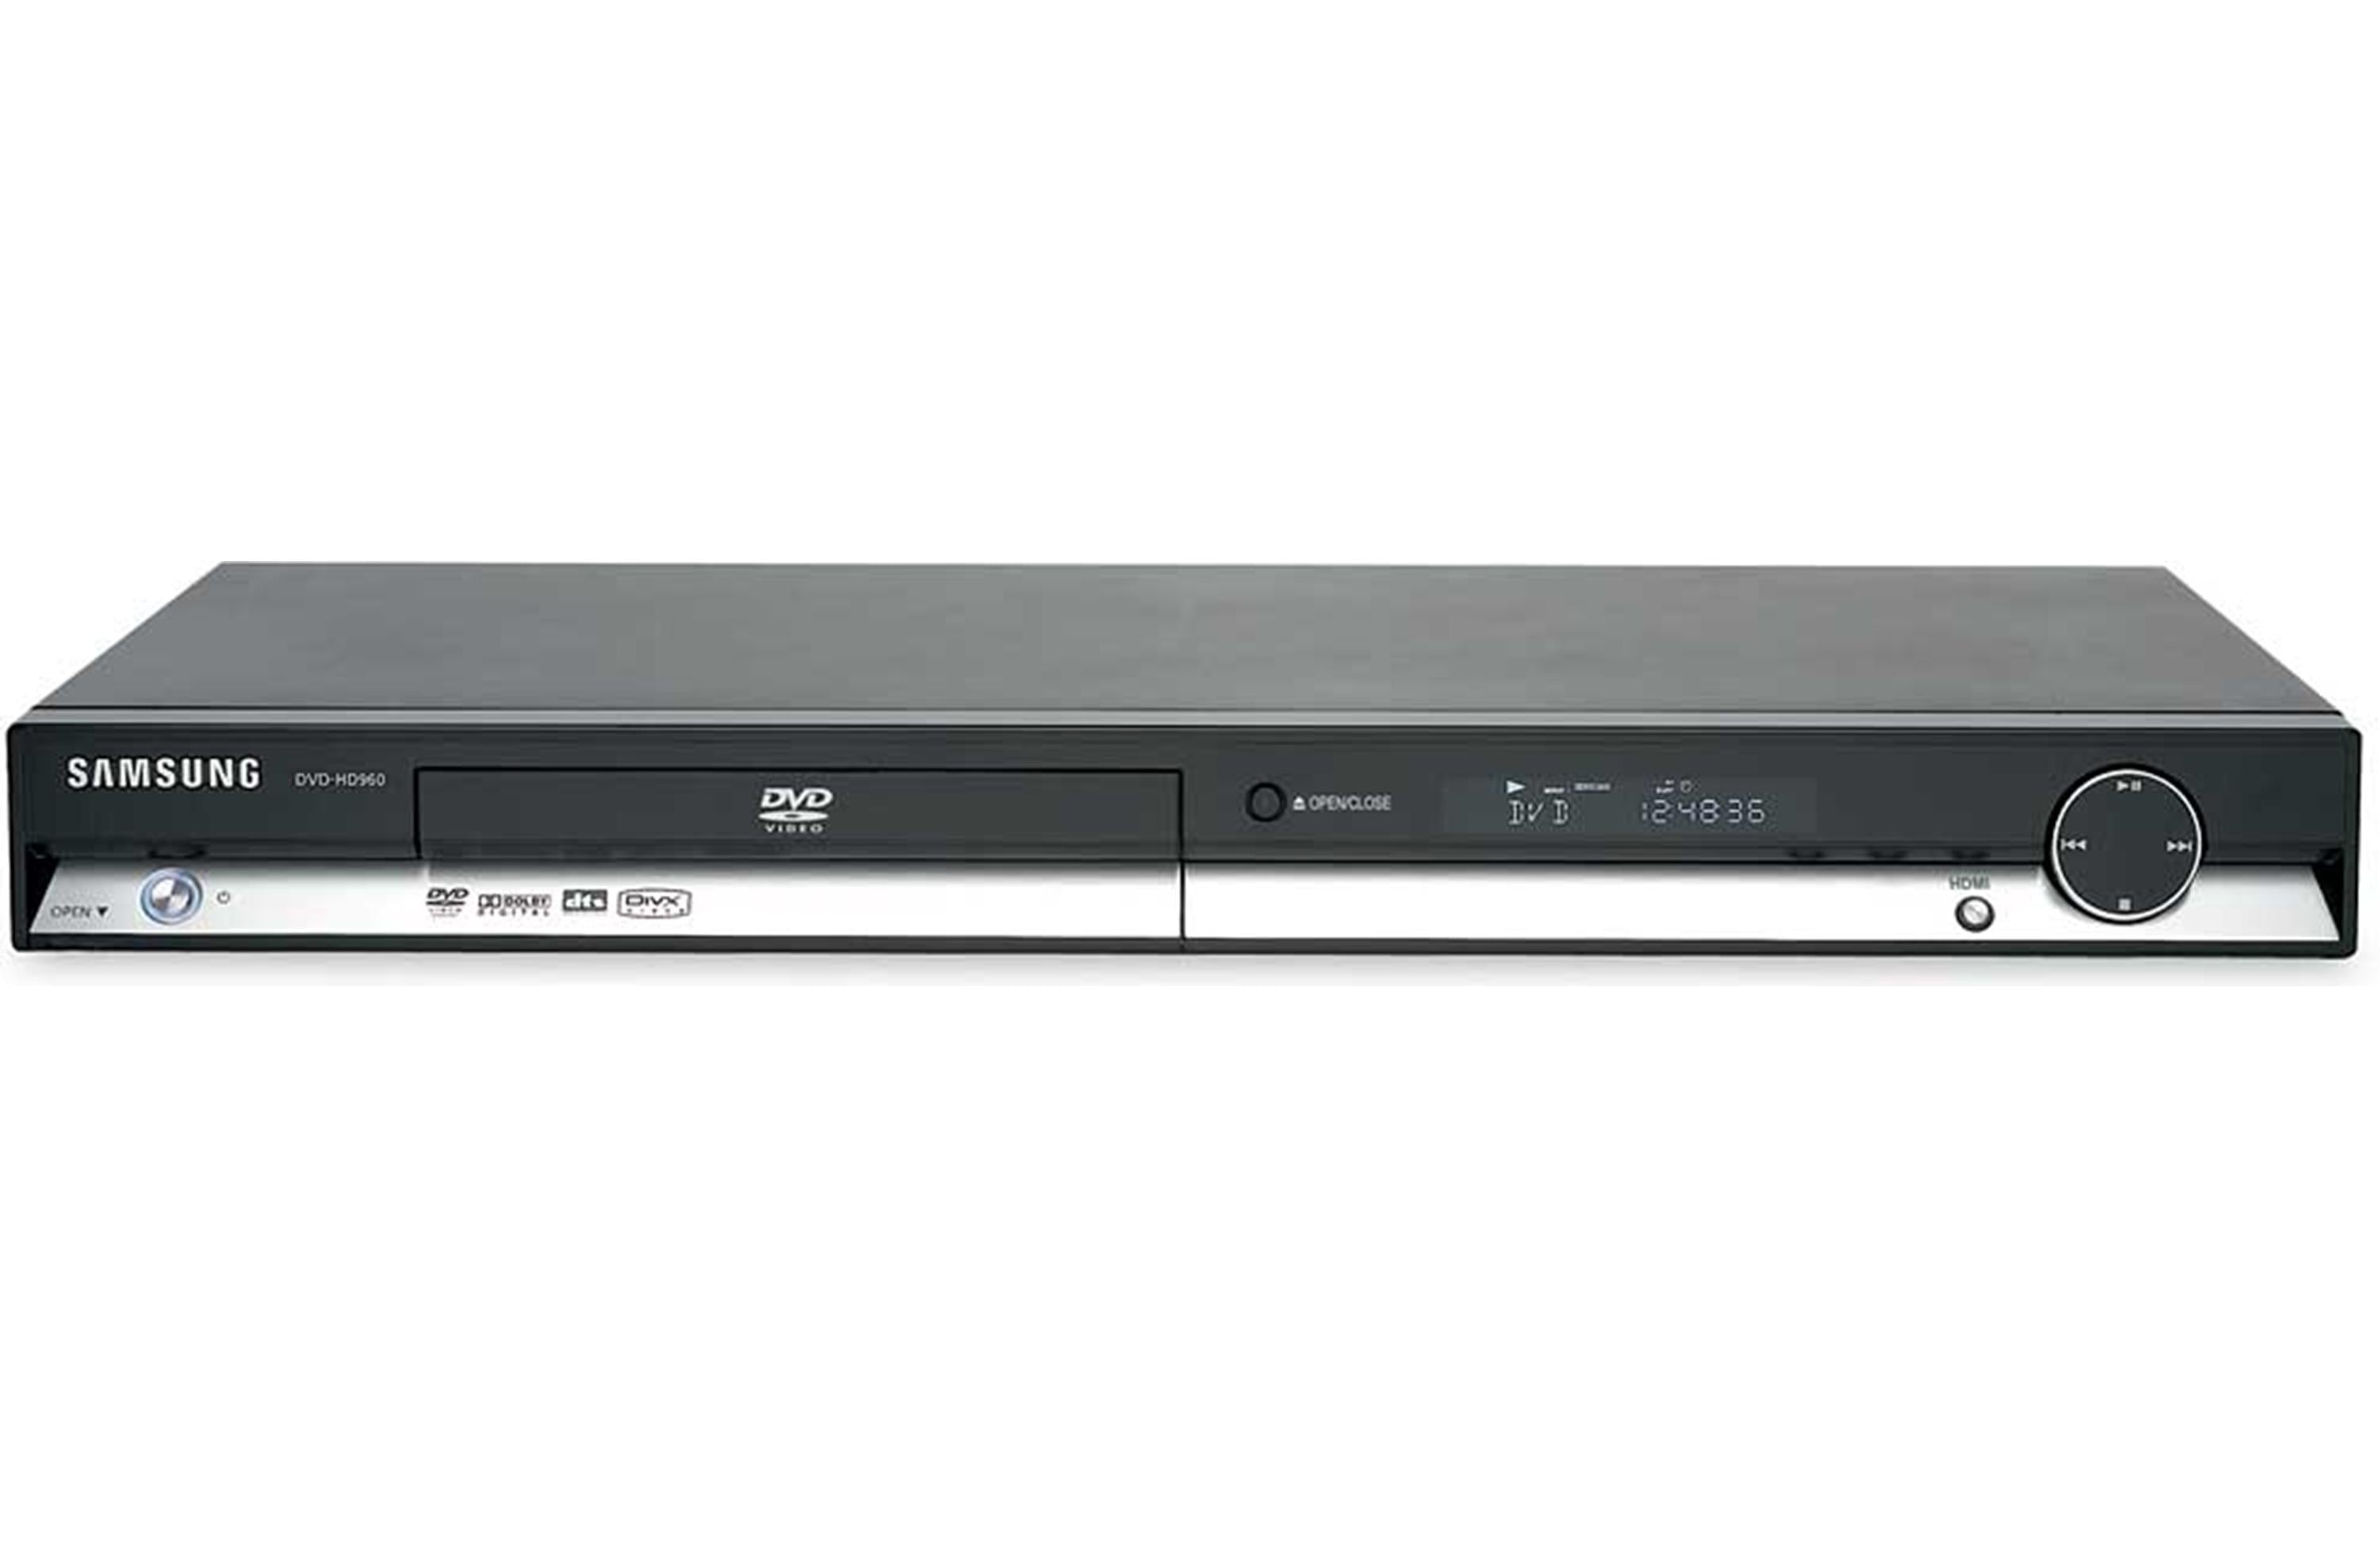 Samsung DVDHD960 DVD/cd Player With Digital Video Output - Samsung Parts USA